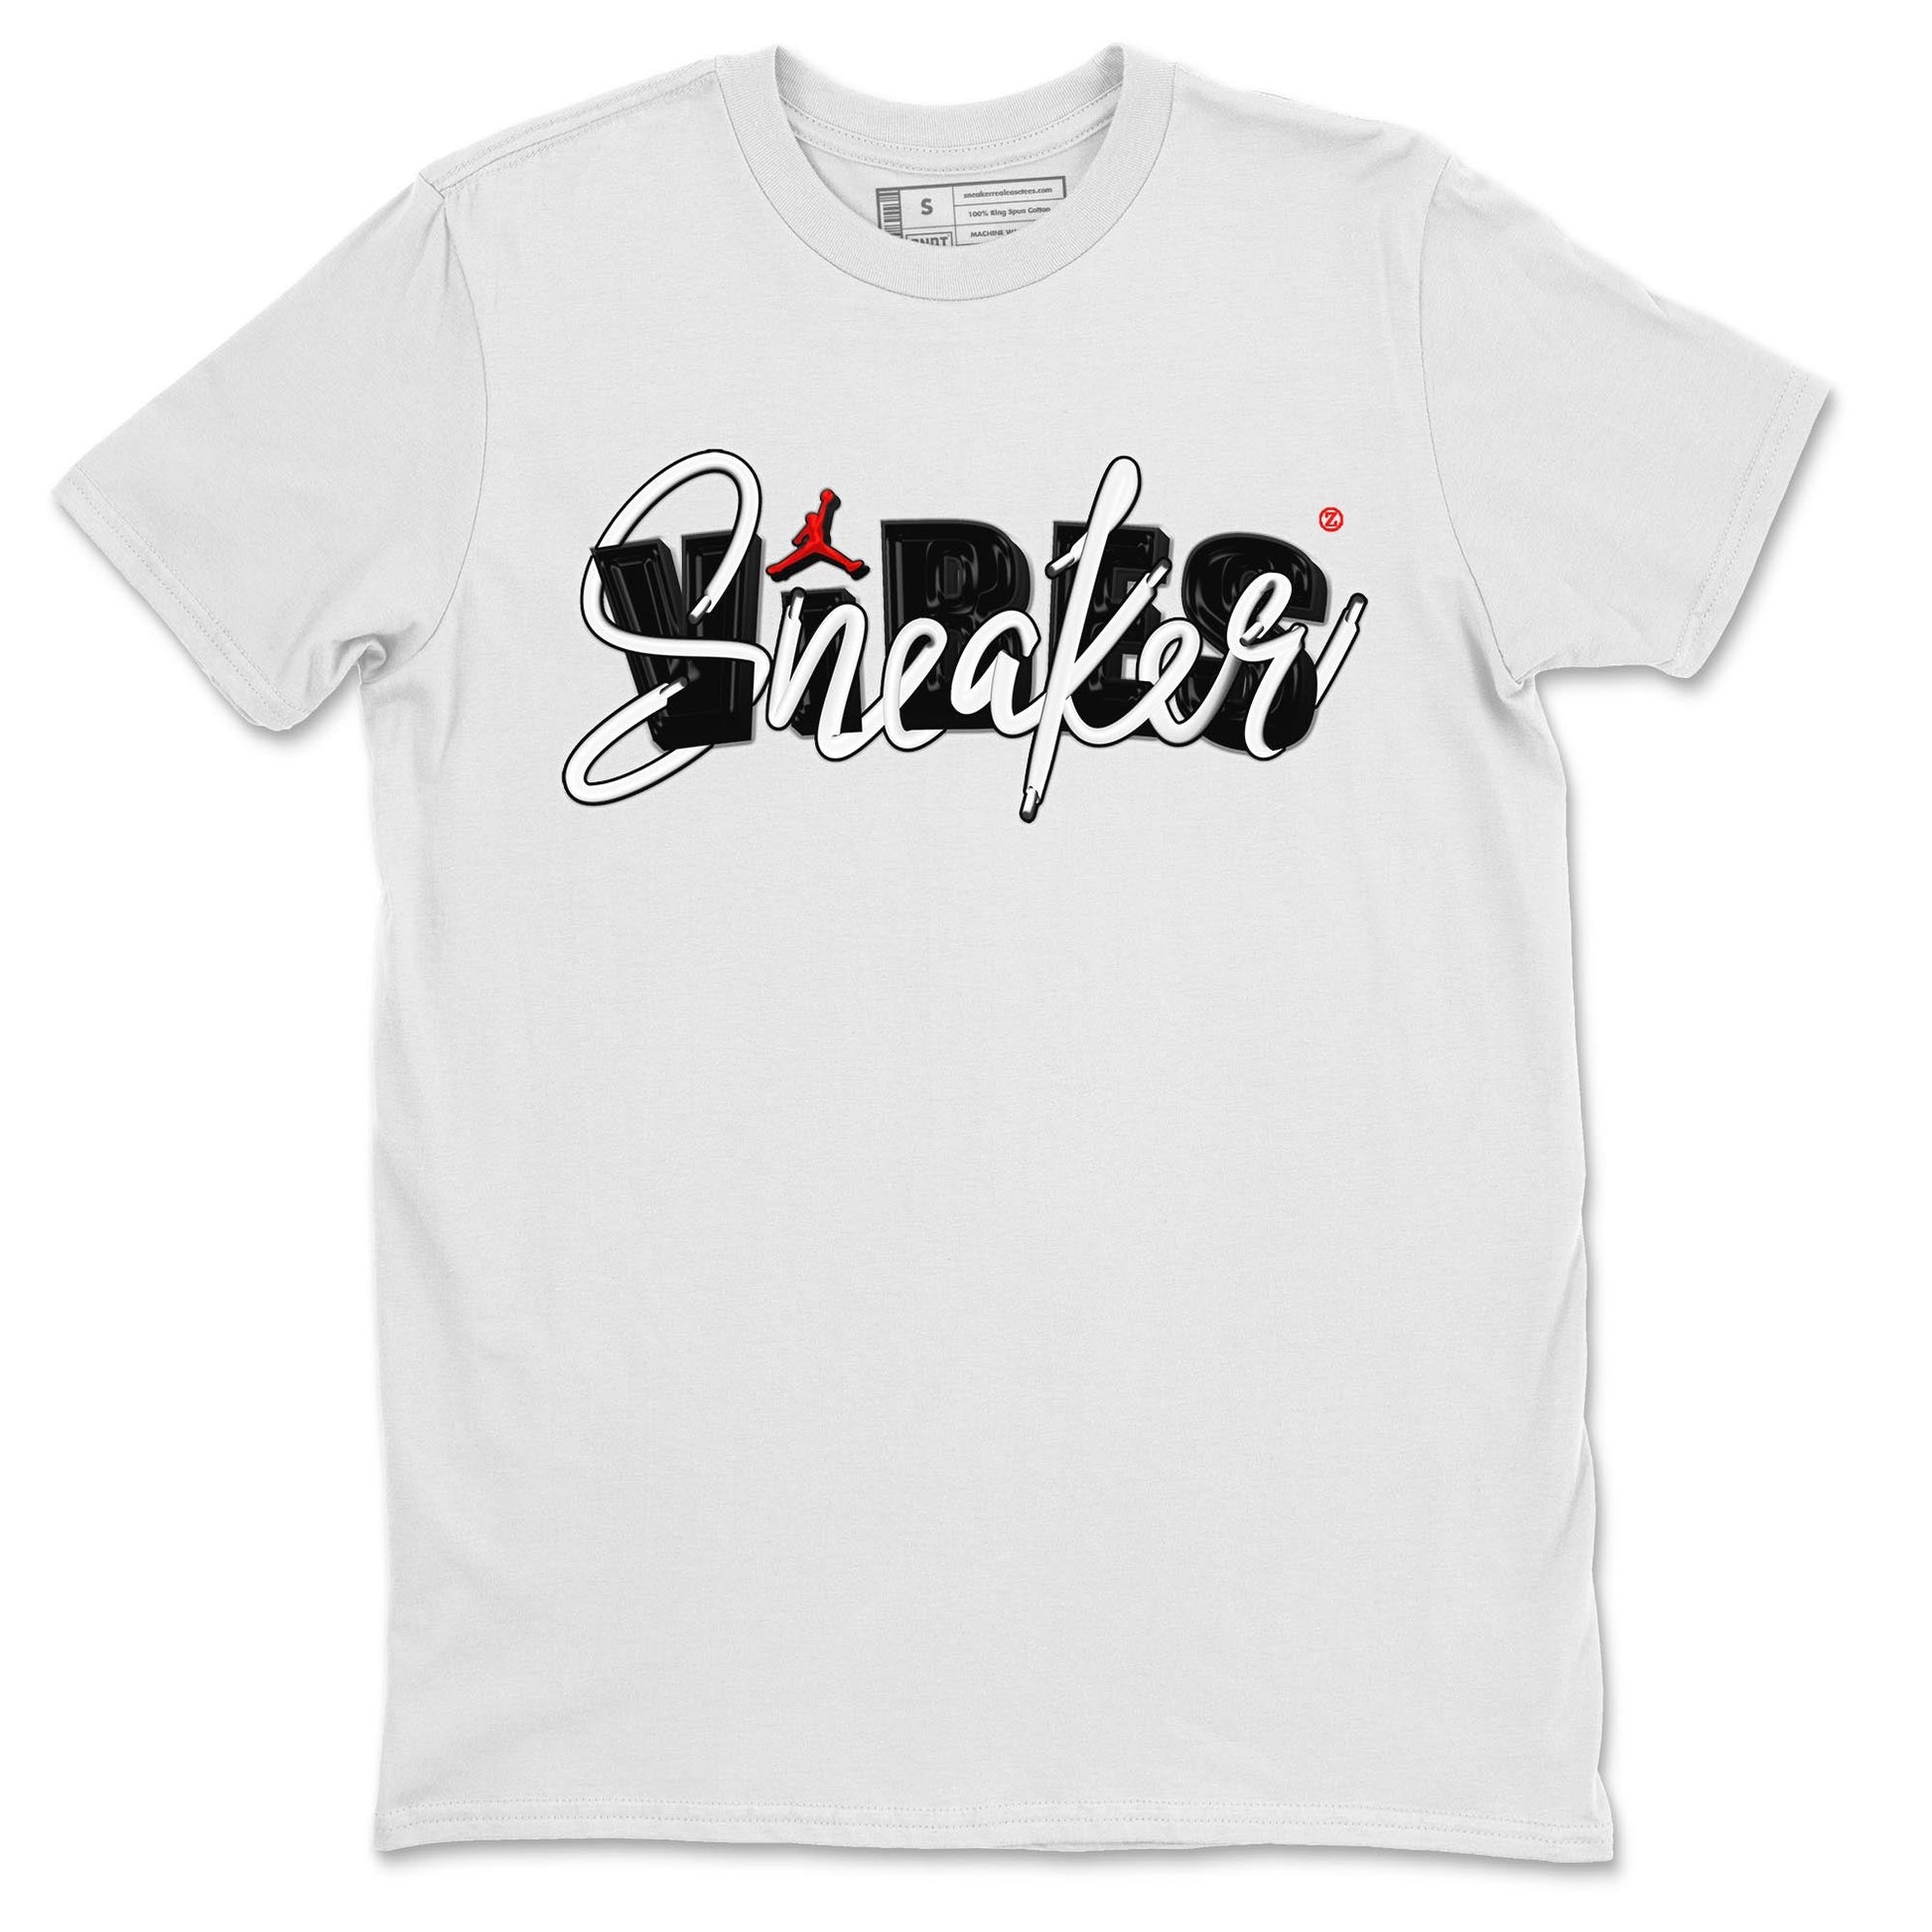 Yeezy 350 Bred shirt to match jordans Sneaker Vibes Streetwear Sneaker Shirt Yeezy Boost 350 V2 Bred Drip Gear Zone Sneaker Matching Clothing Unisex White 2 T-Shirt